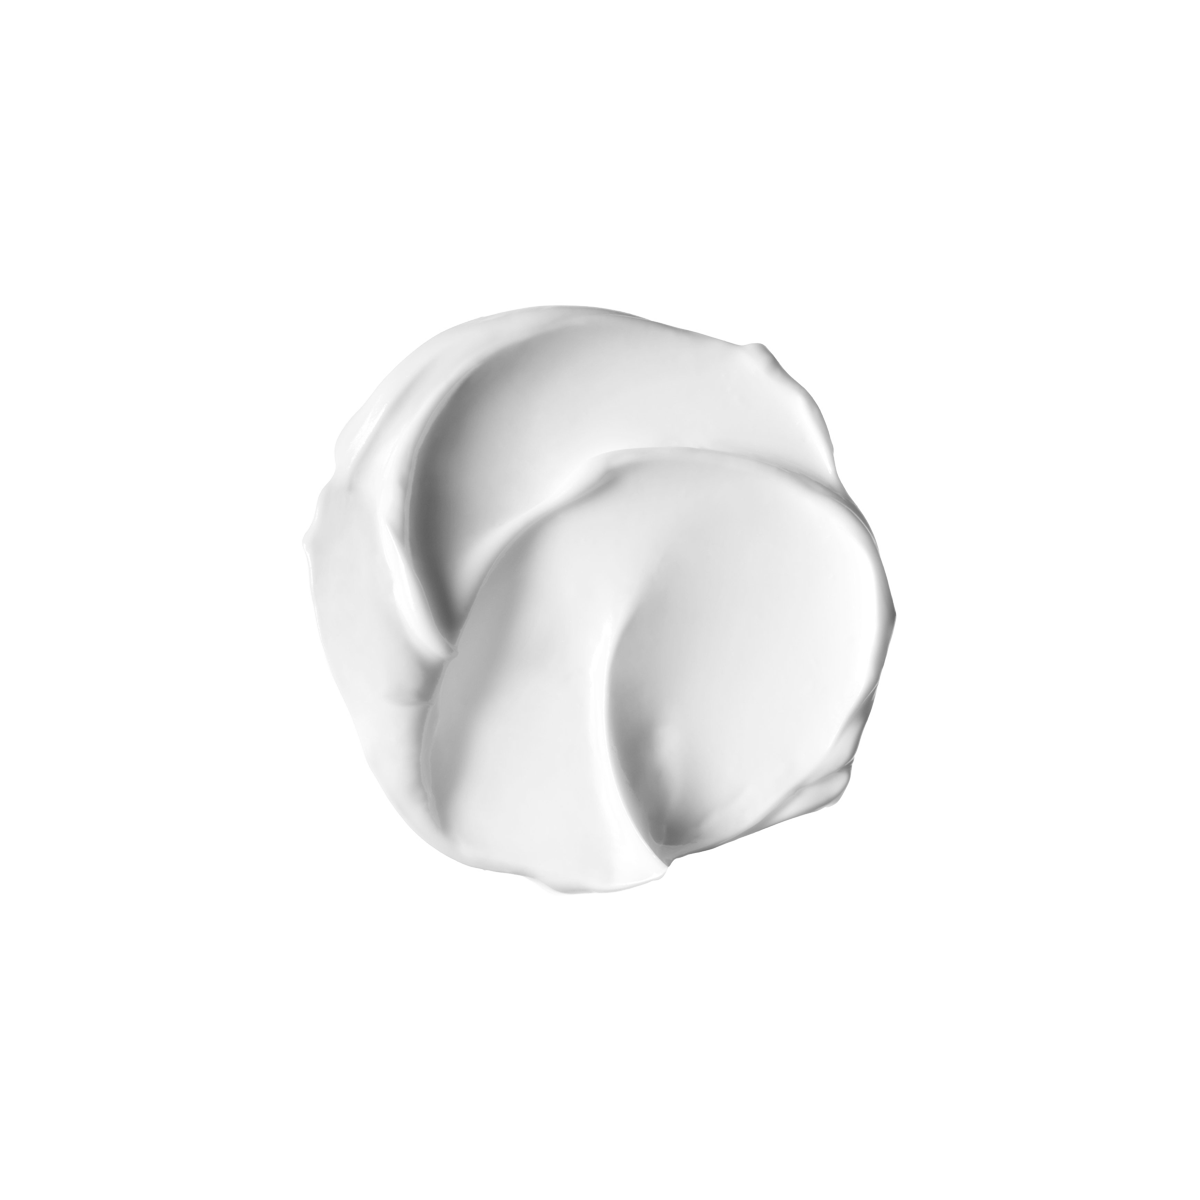 Sunday Riley - ICE Ceramide Moisturizing Cream